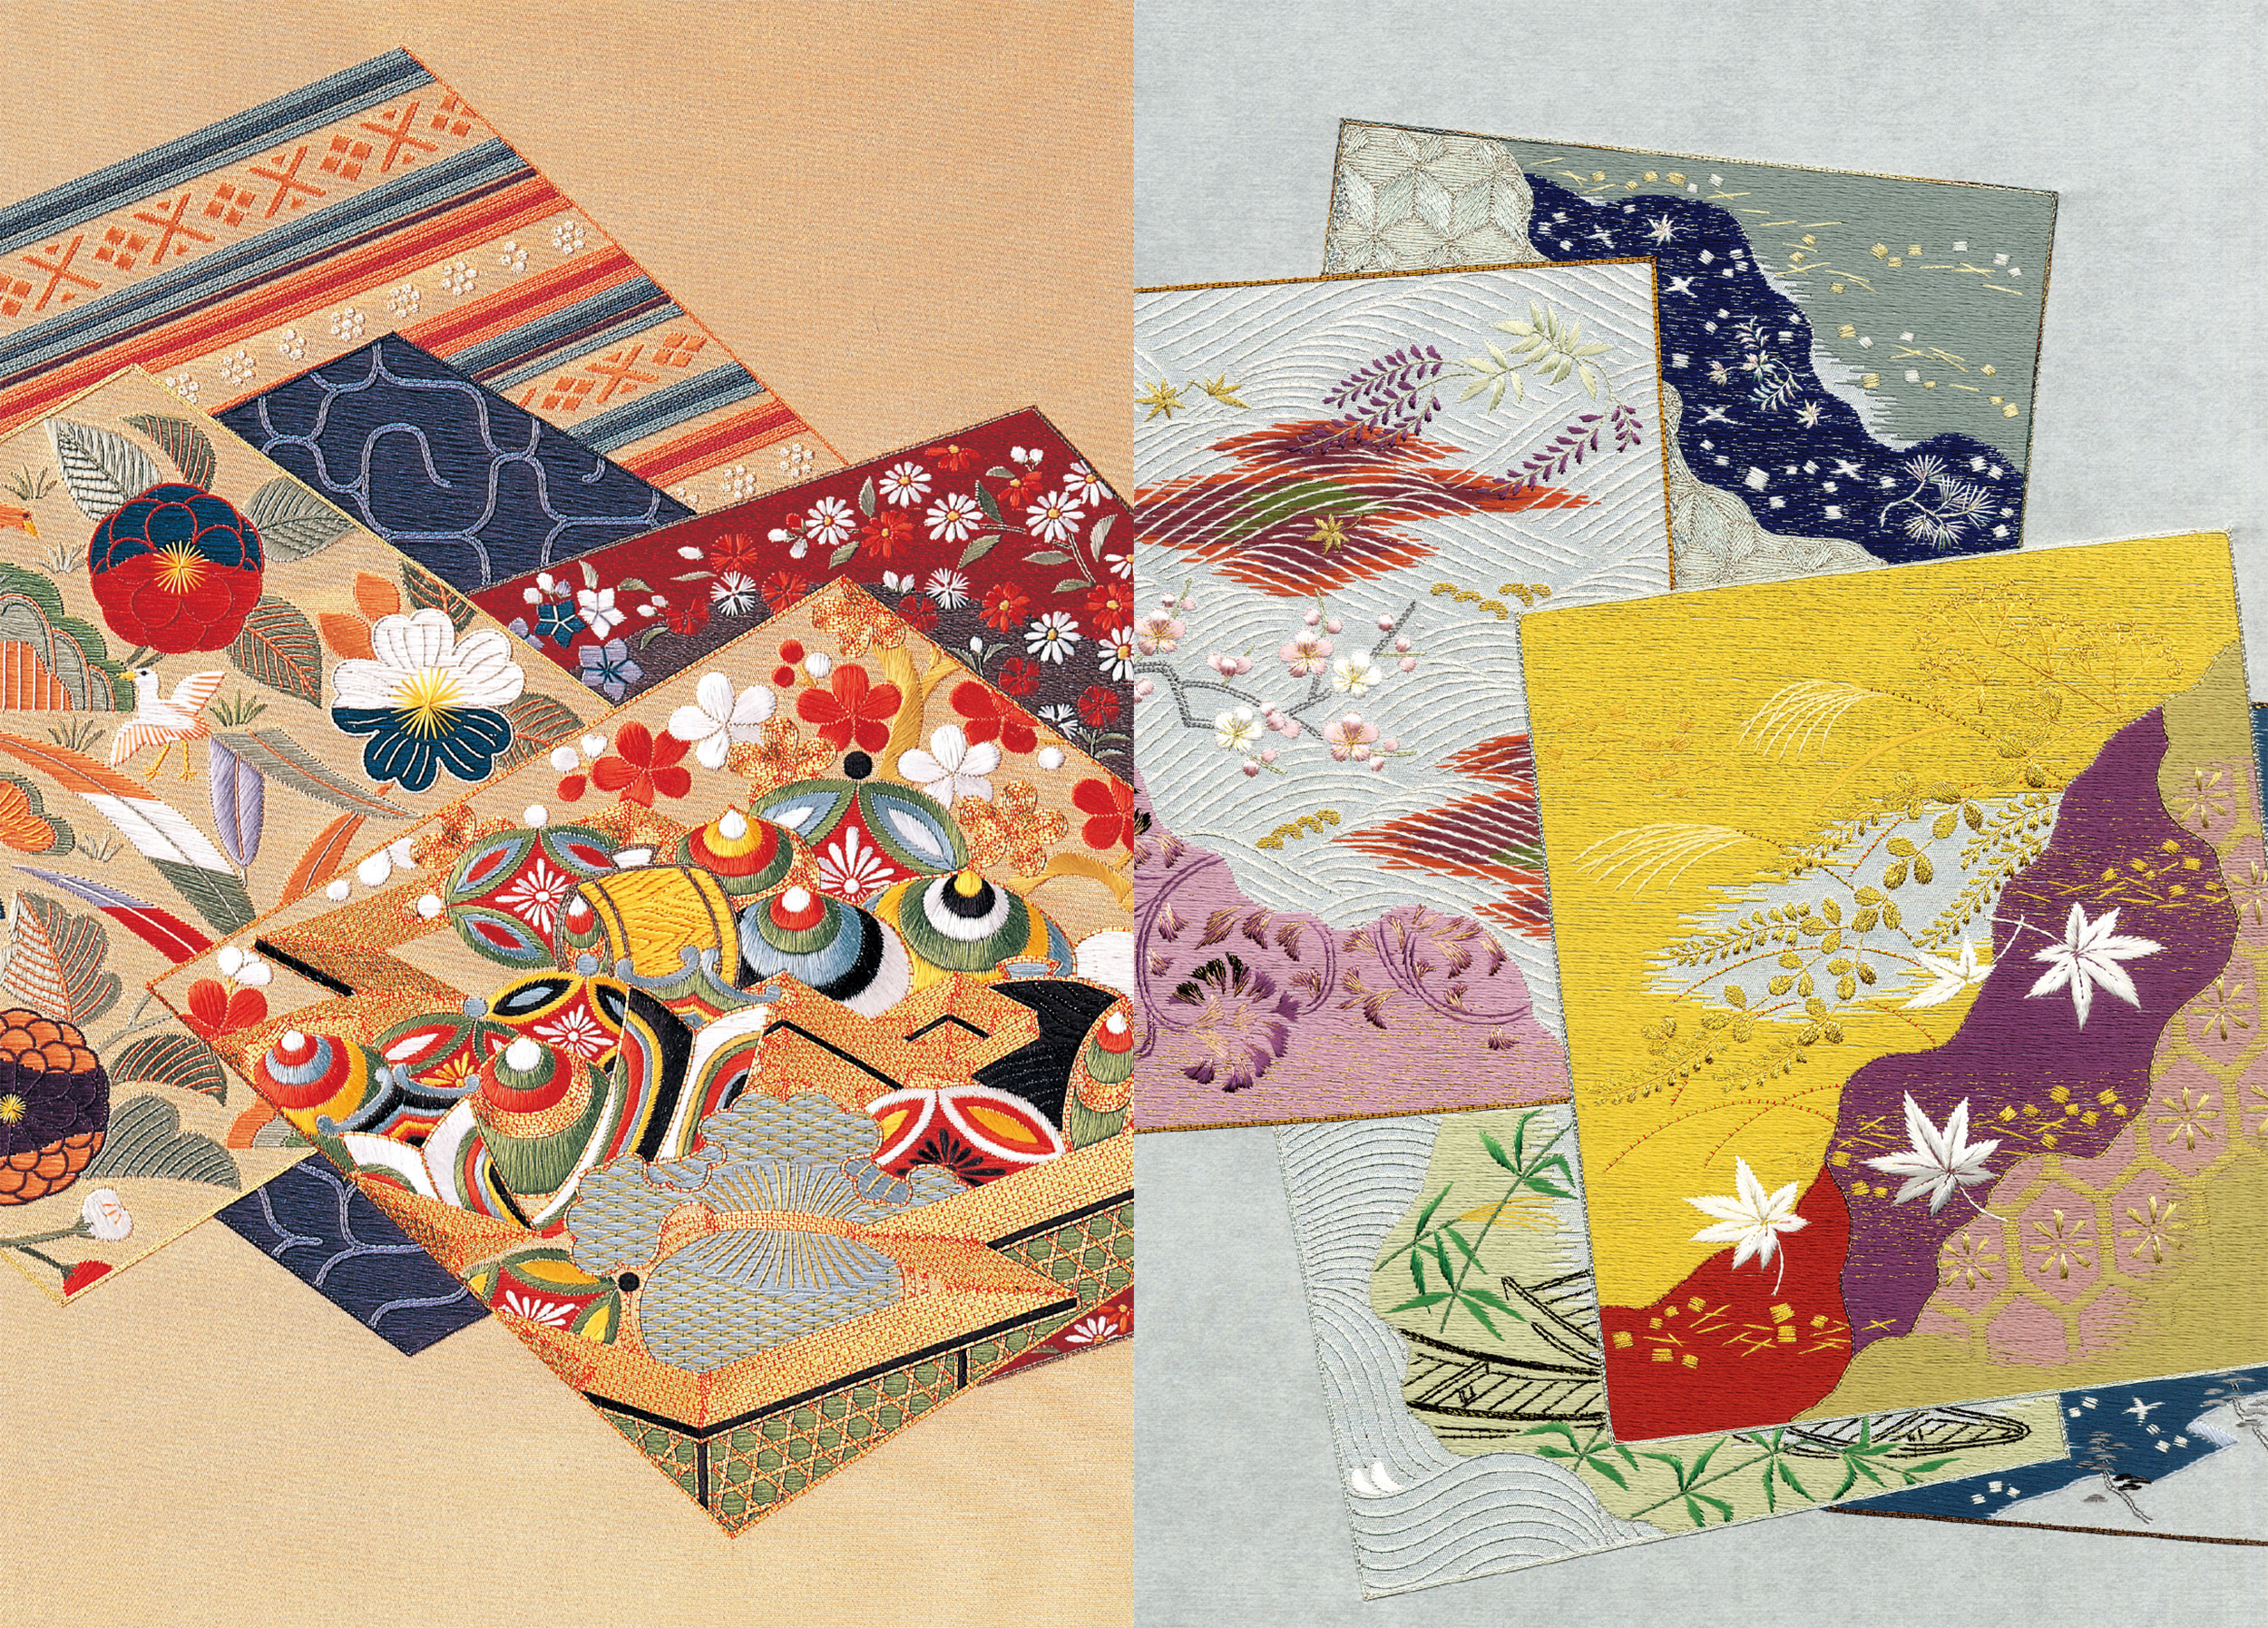 Japanese Patterns & Designs – Olaf Olsson